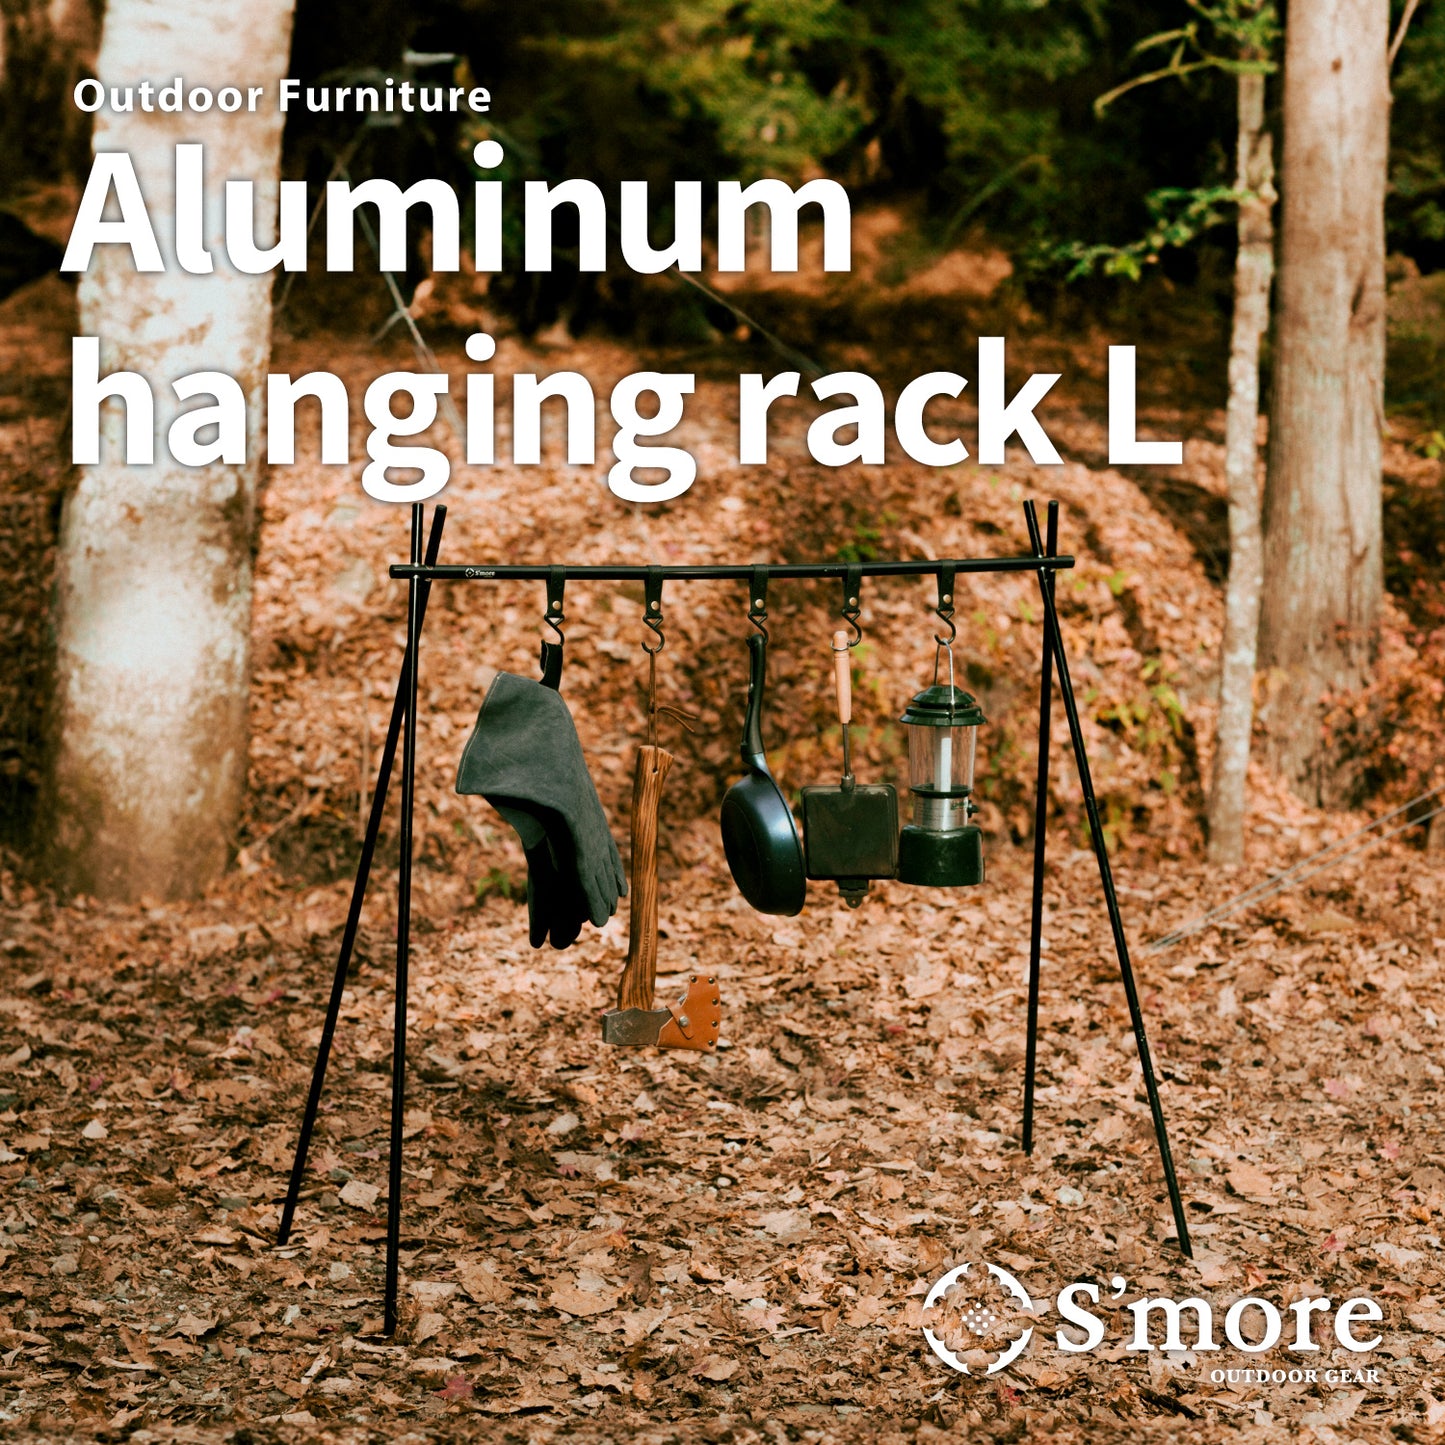 Aluminum hanging lack 鋁合金掛架(L Size)